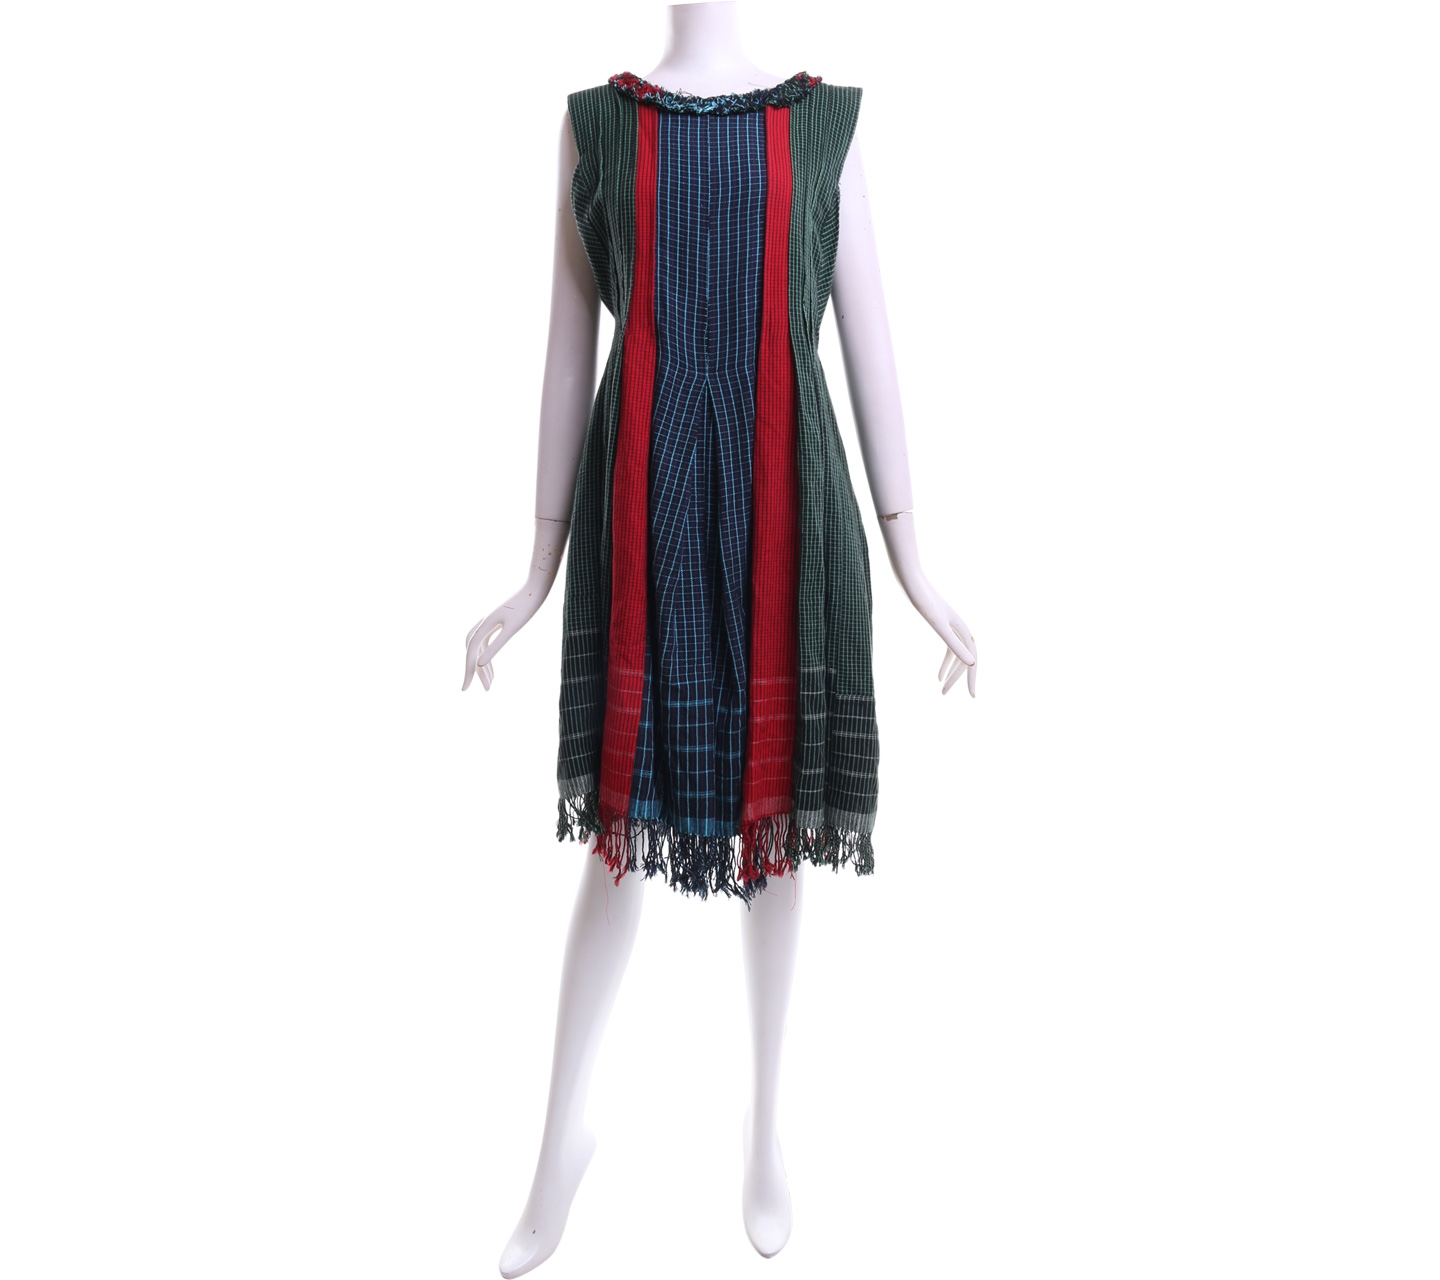 Lekat Multicolor Dress Siwir Lurik Midi Dress